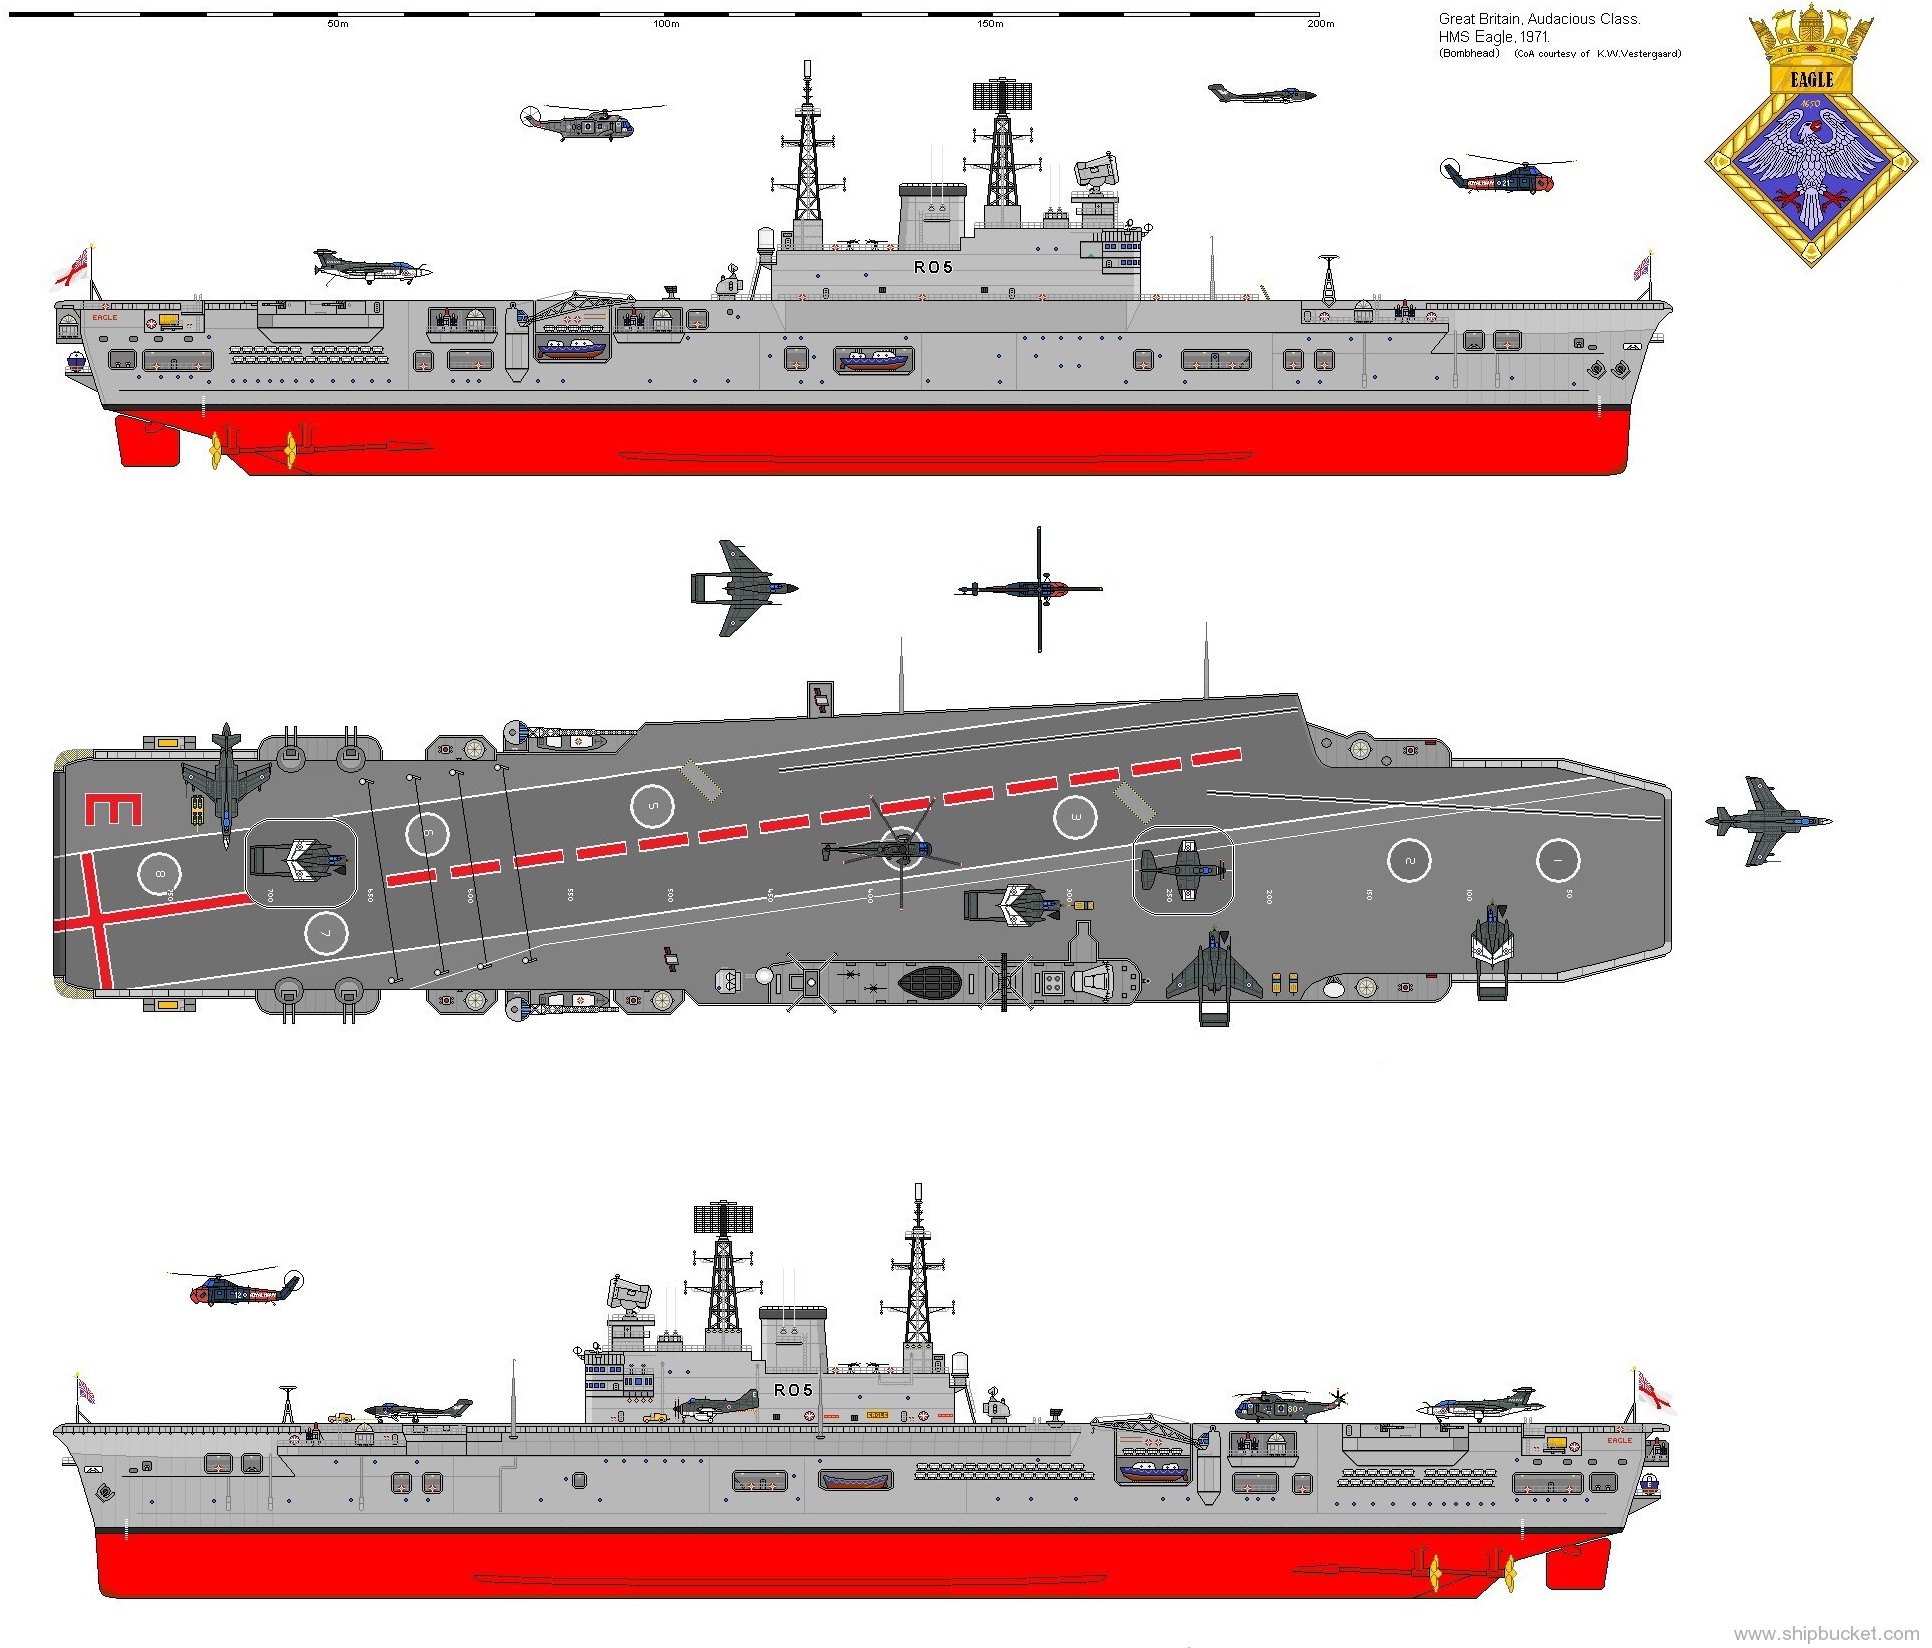 r-05 hms eagle audacious class aircraft carrier royal navy 06 drawing